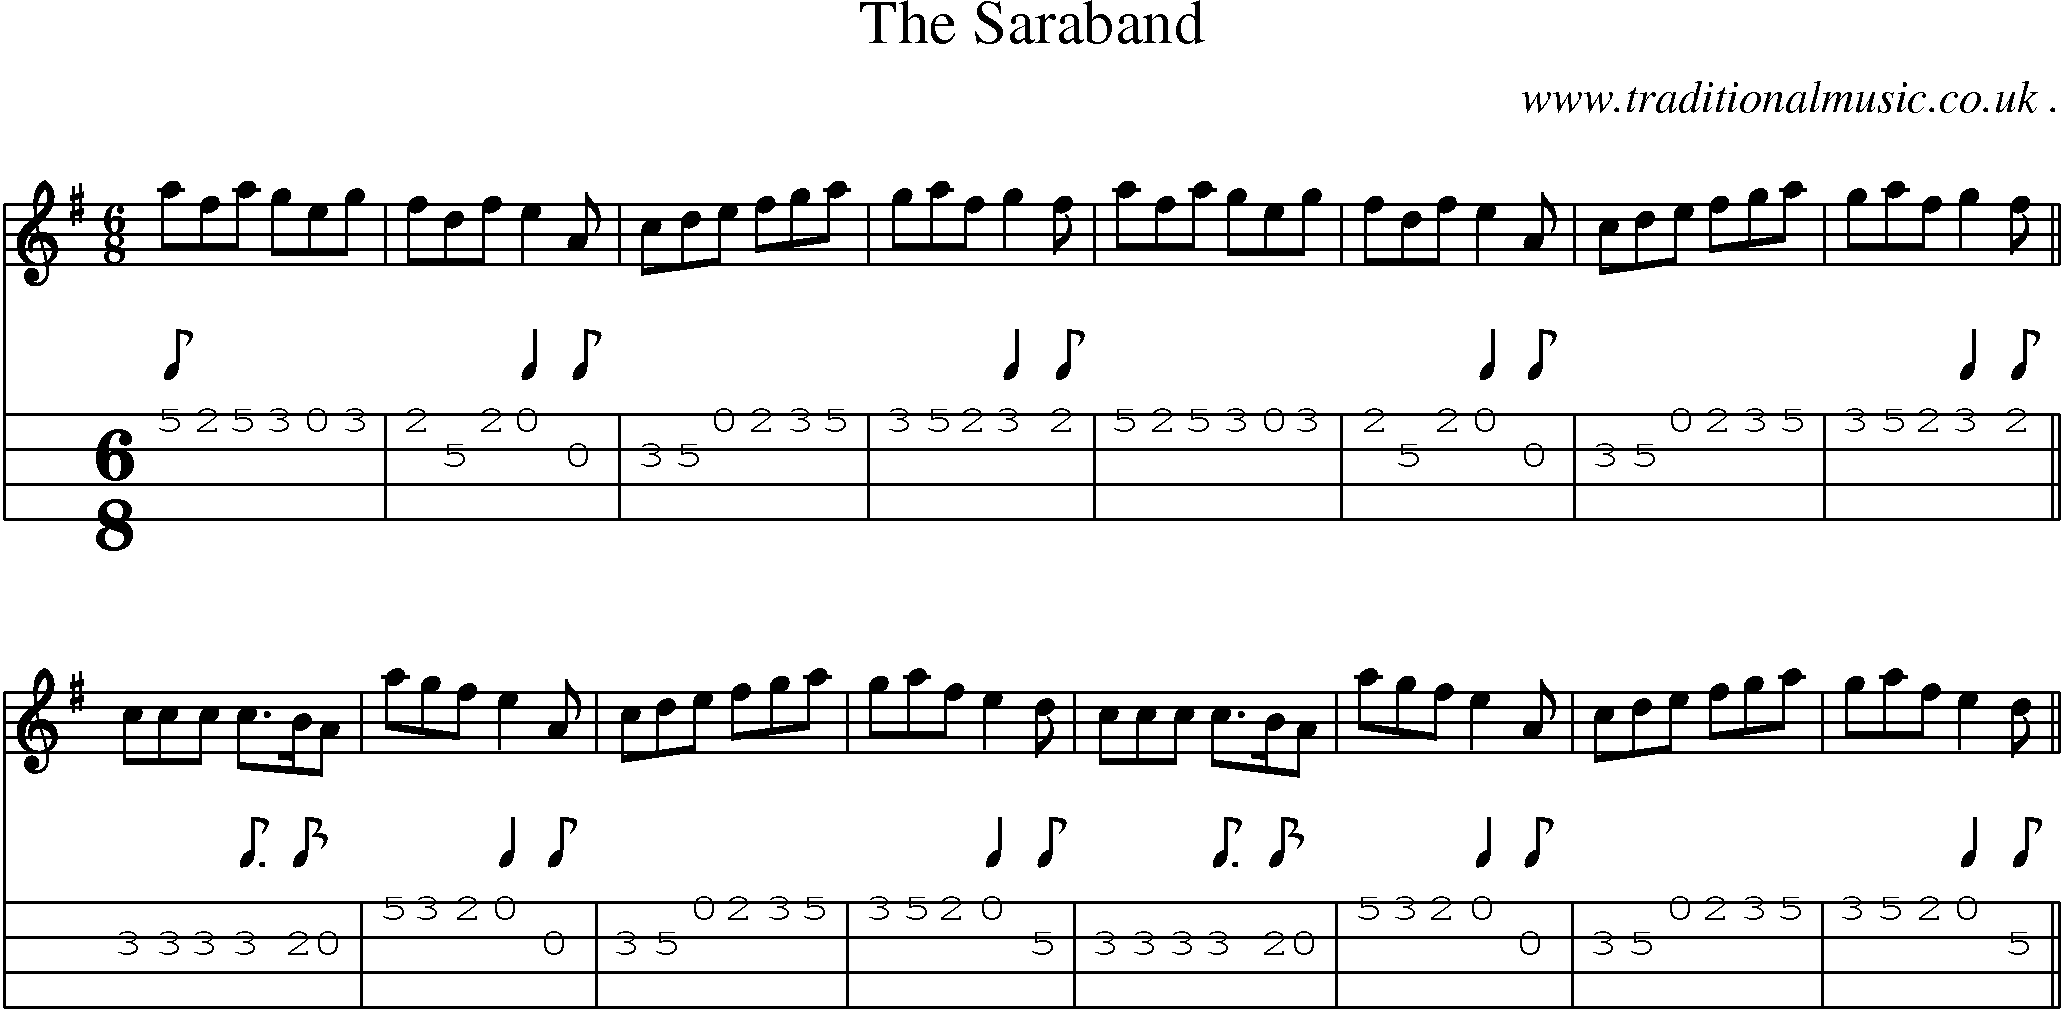 Sheet-Music and Mandolin Tabs for The Saraband